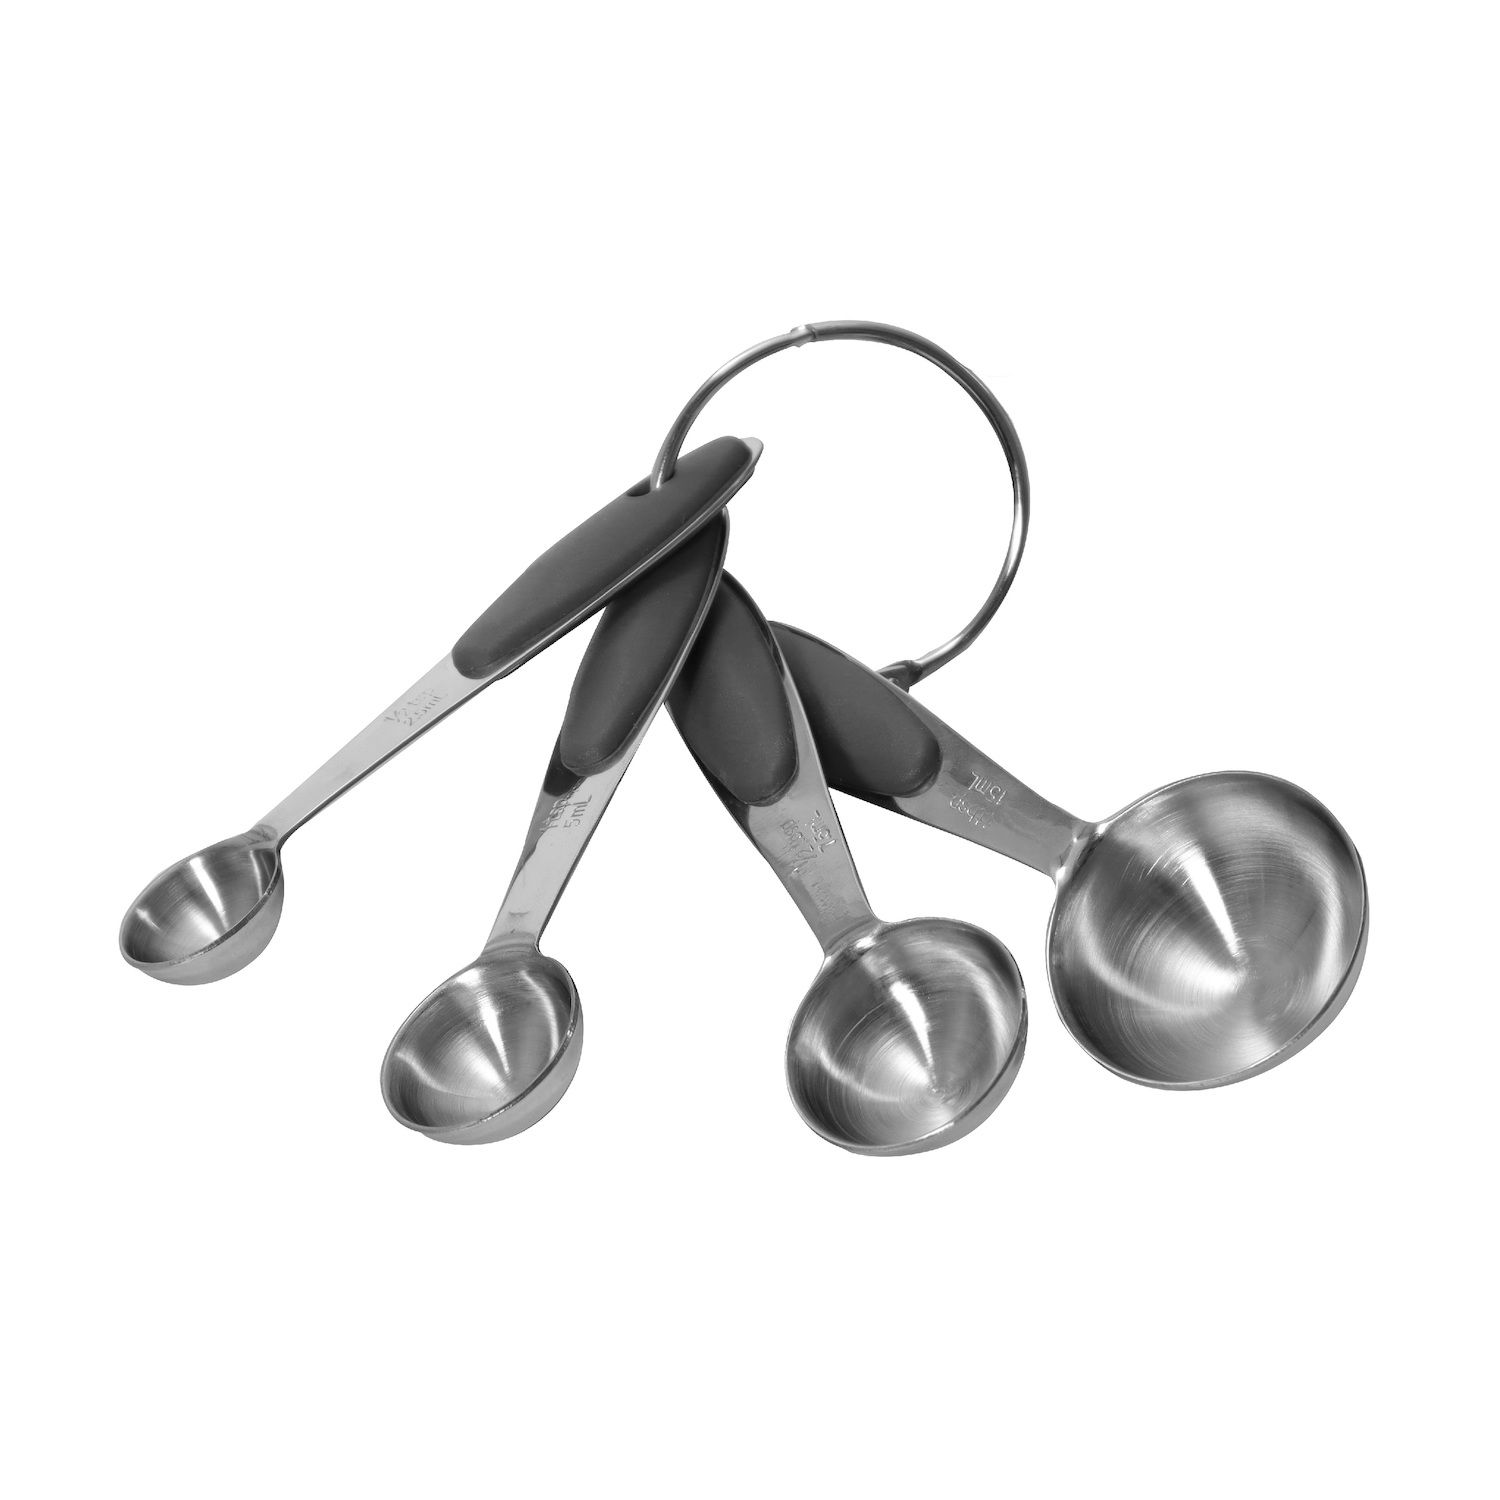 2lbDepot Measuring Spoons Set of 9 Includes Bonus Leveler